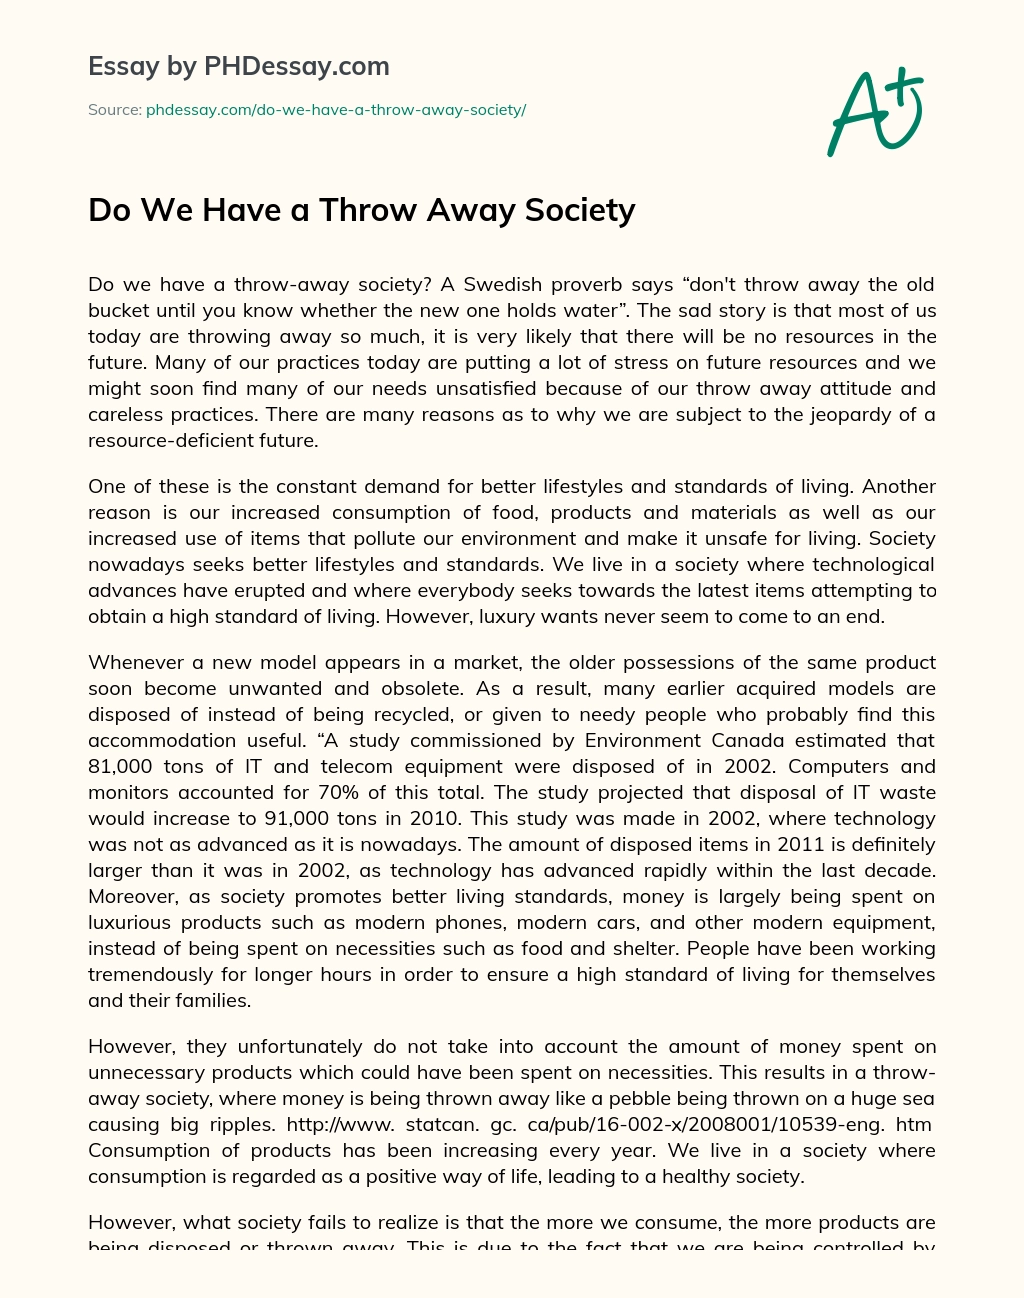 Do We Have a Throw Away Society essay